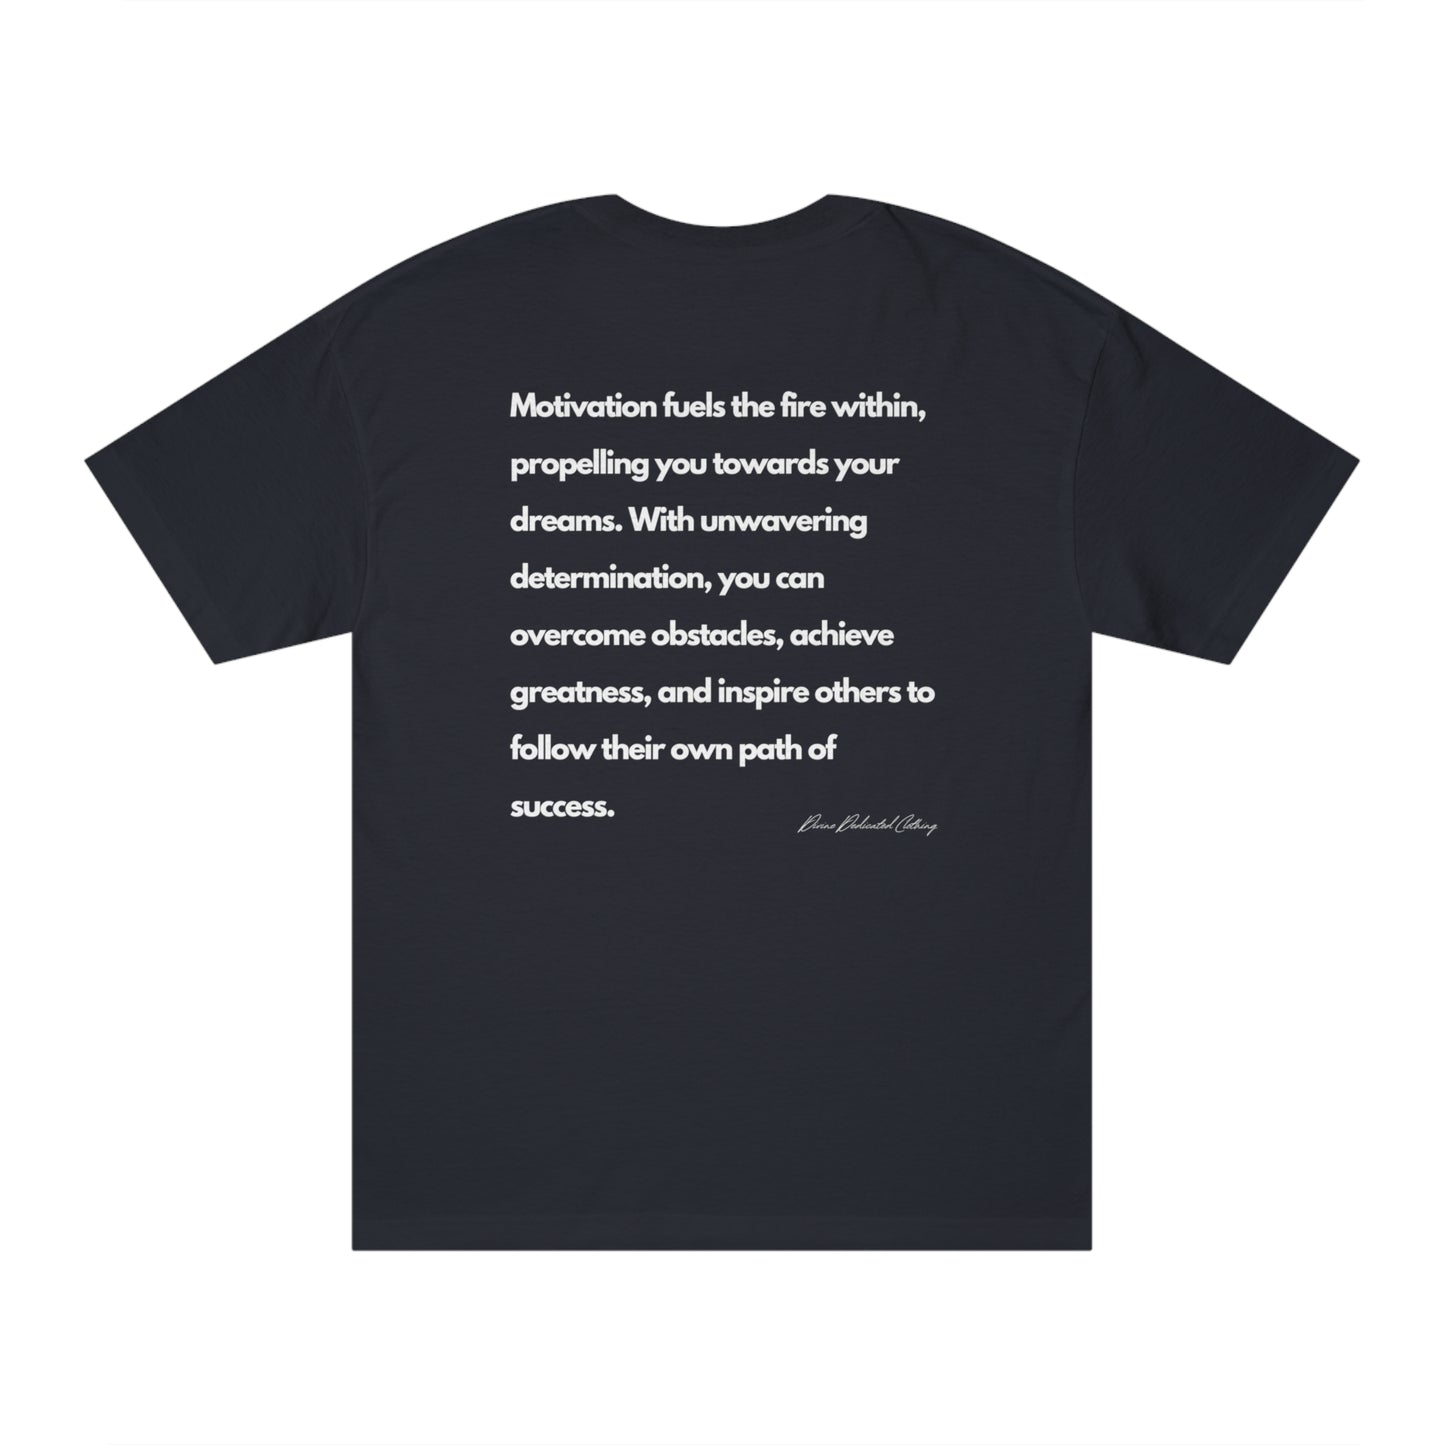 Periodic Element Motivated (Black) - T-Shirt